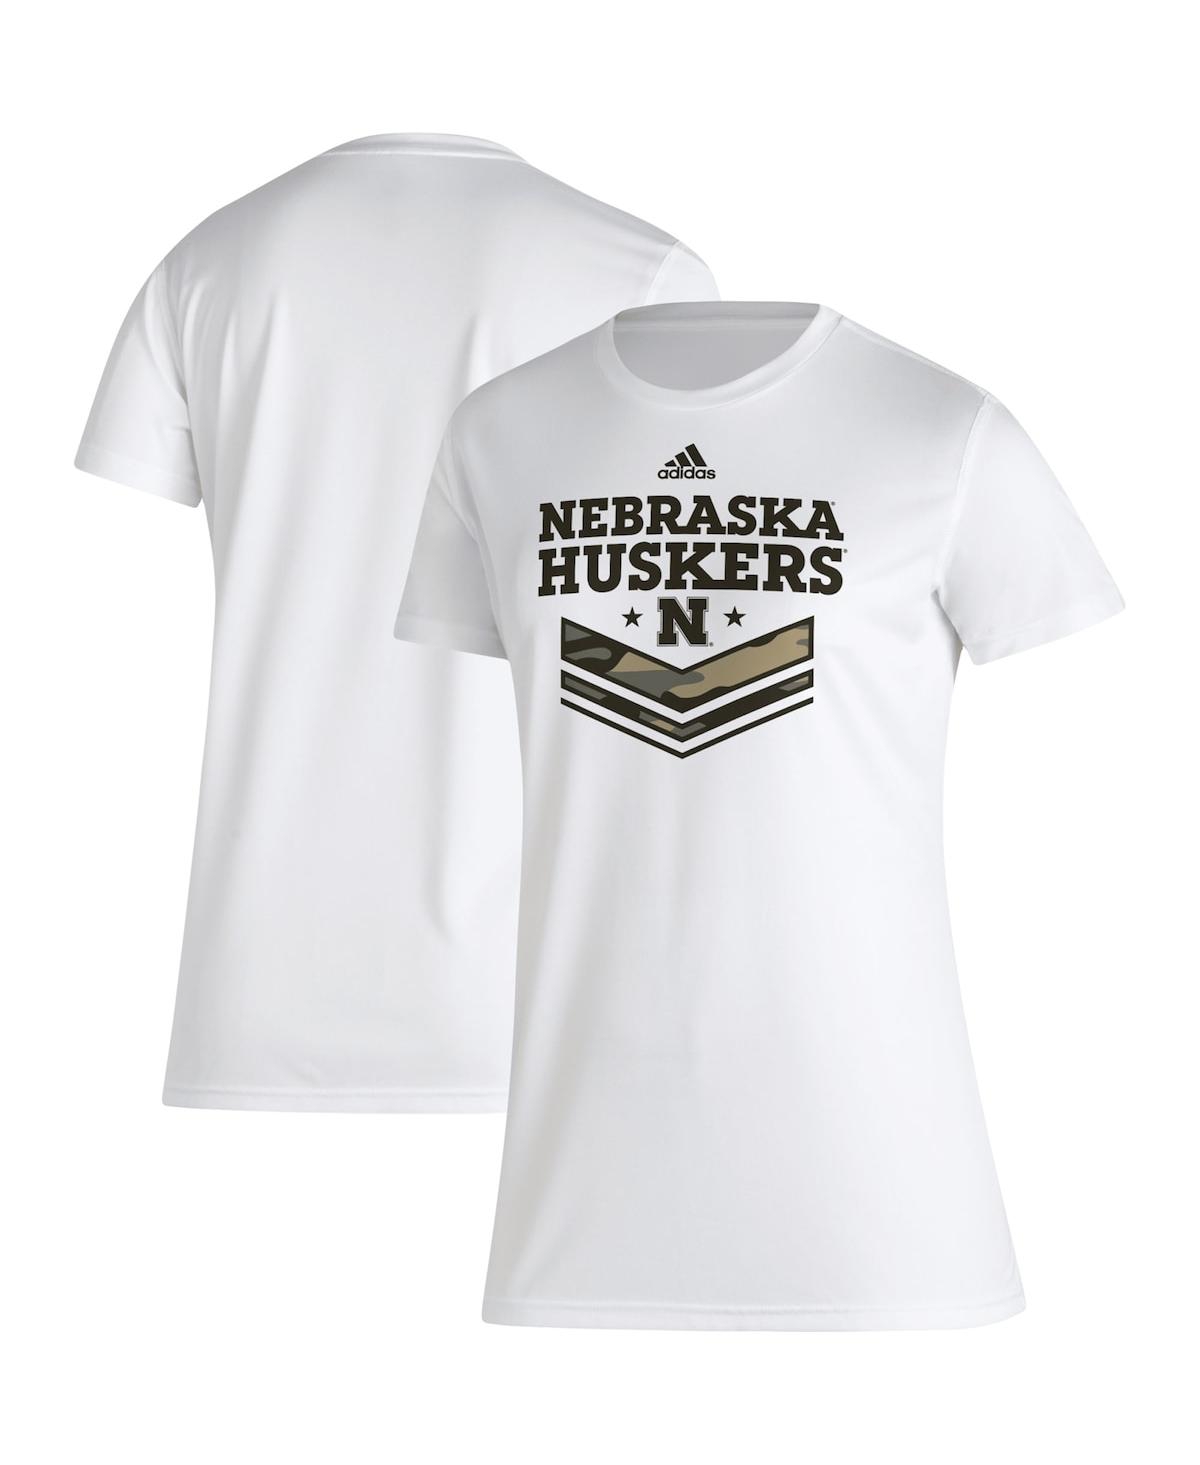 Shop Adidas Originals Women's Adidas White Nebraska Huskers Military-inspired Appreciation Aeroready T-shirt